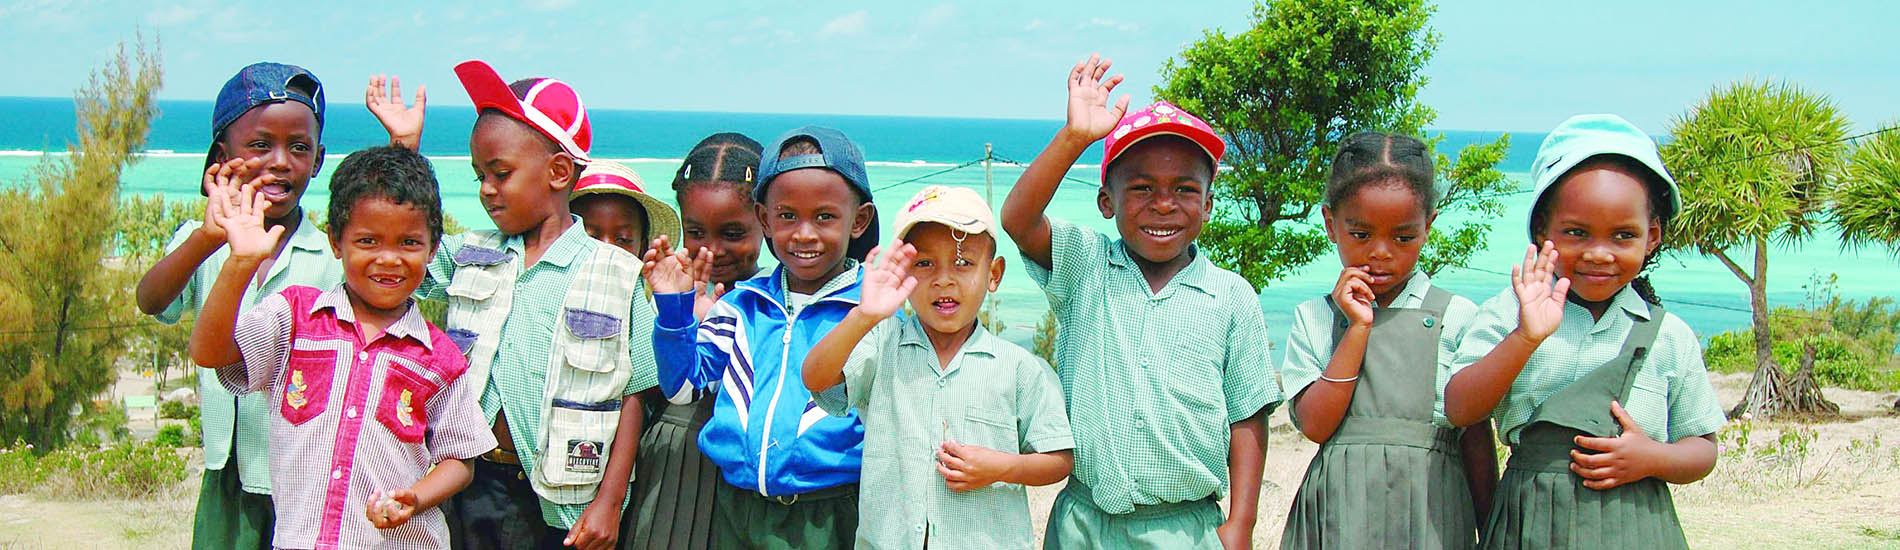 kids-on-way-to-school-rodrigues-island